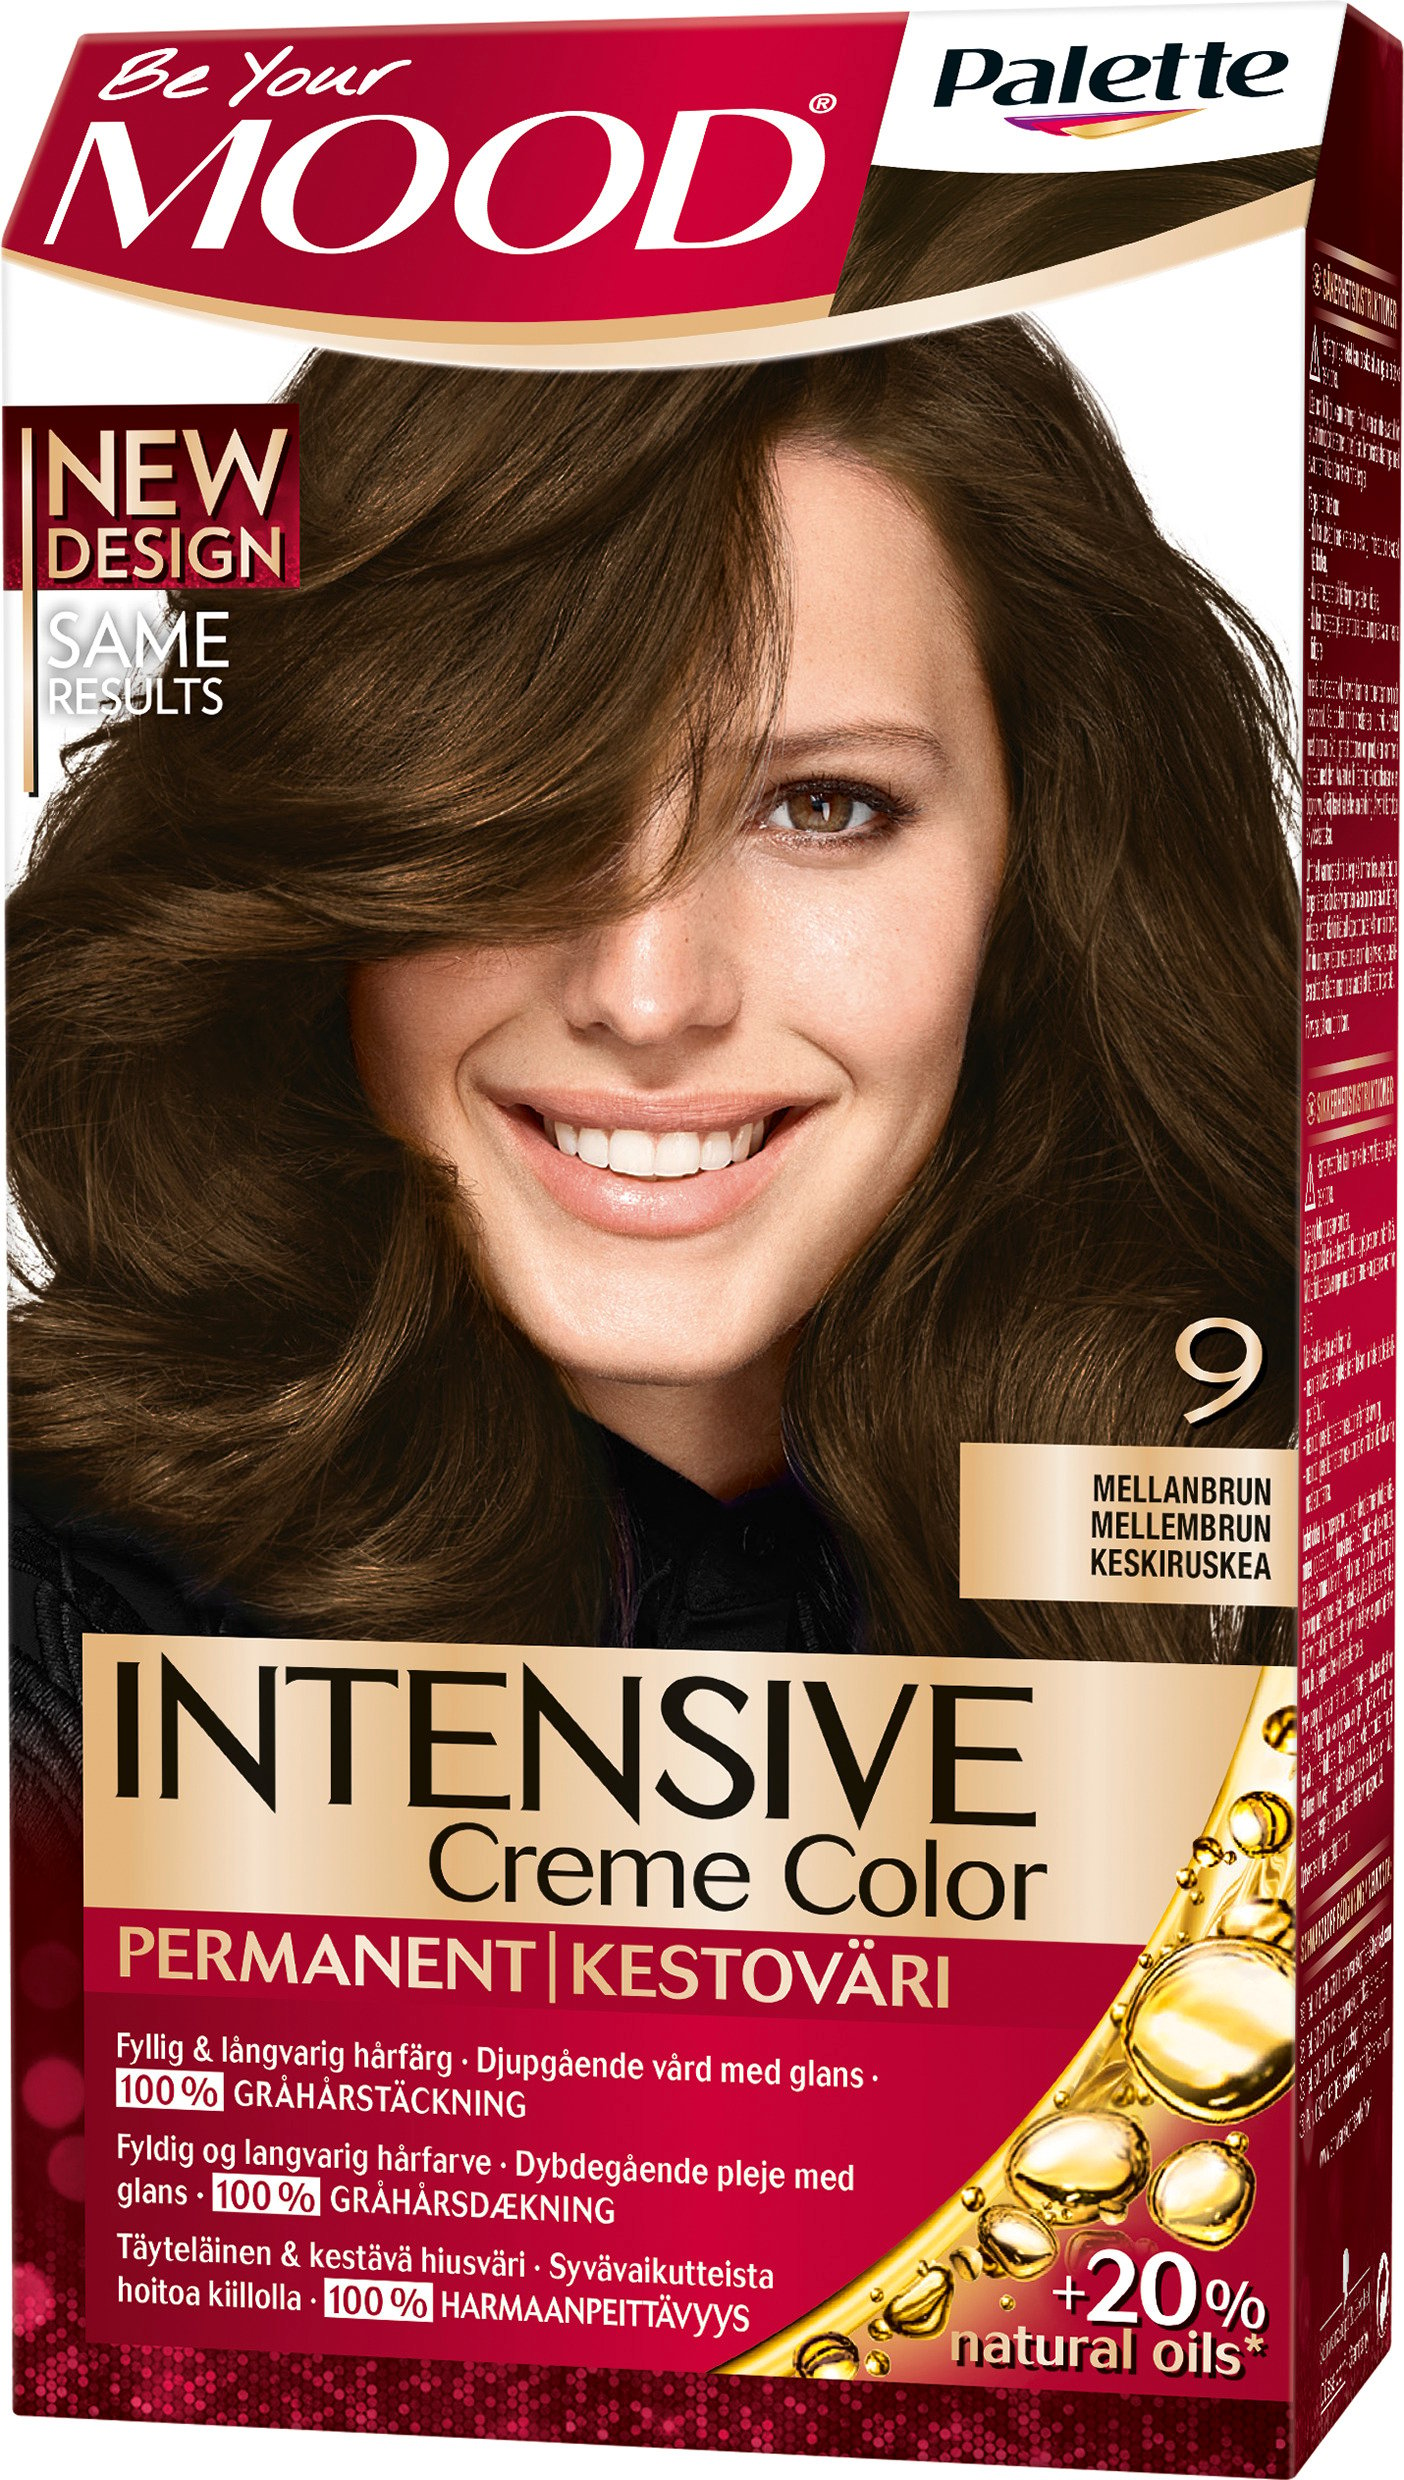 MOOD Palette Intensive Creme Color 9 Mellanbrun